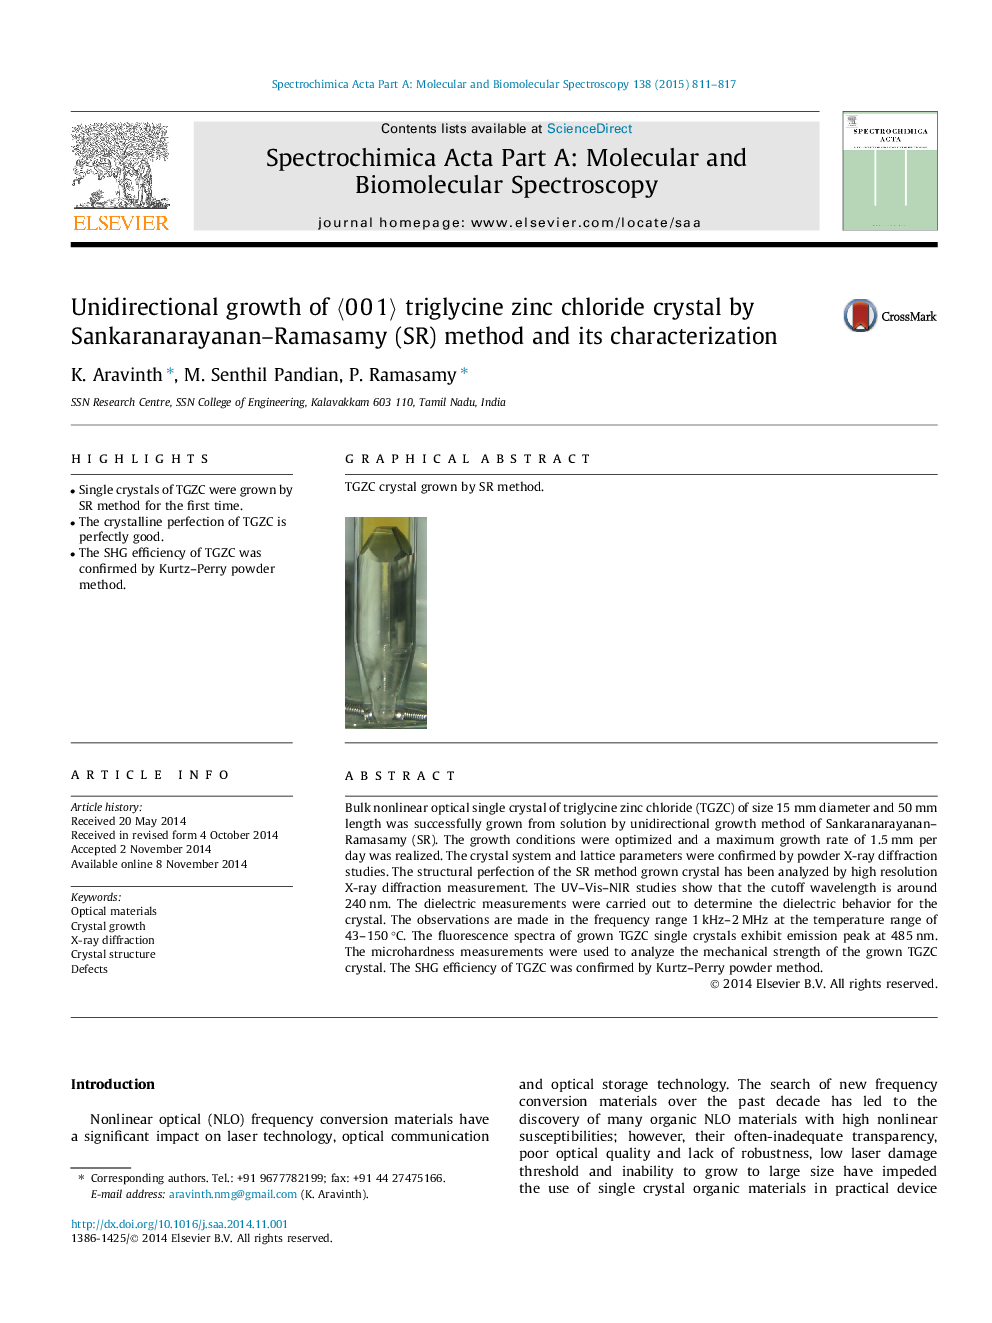 Unidirectional growth of 〈0 0 1〉 triglycine zinc chloride crystal by Sankaranarayanan–Ramasamy (SR) method and its characterization